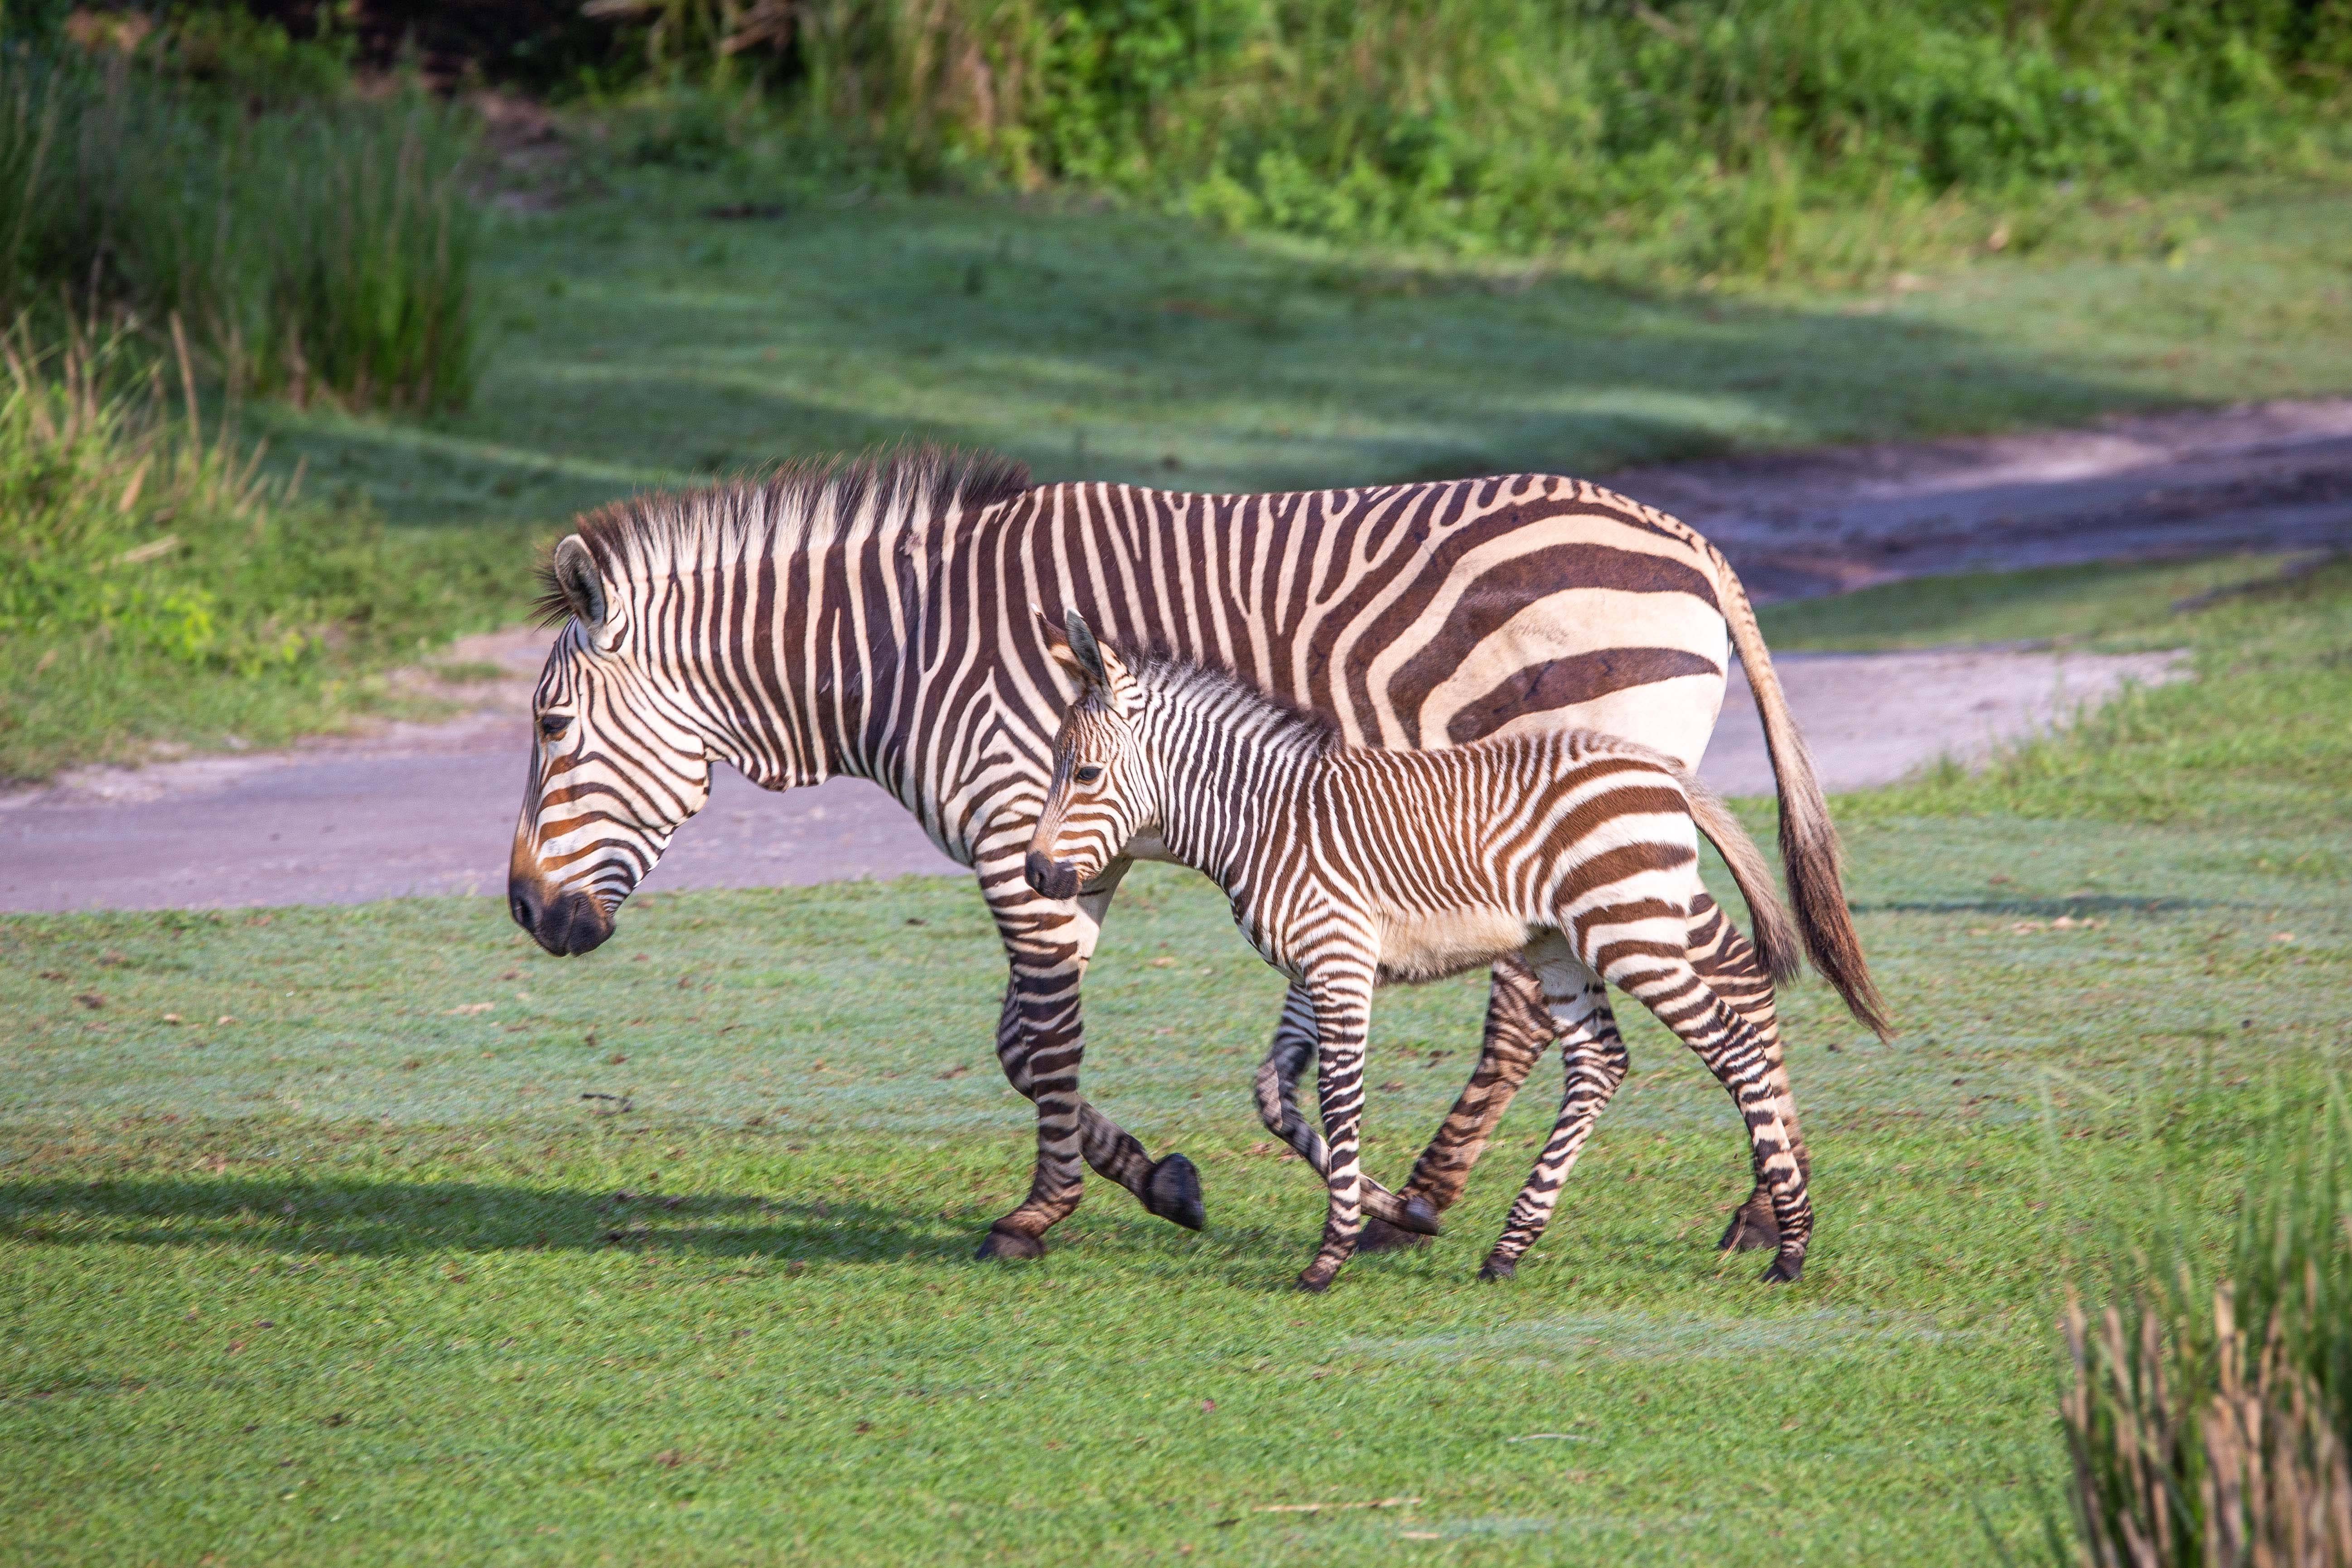 Two Hartmann's mountain zebra foals recently debuted at Kilimanjaro Safaris in Disney's Animal Kingdom